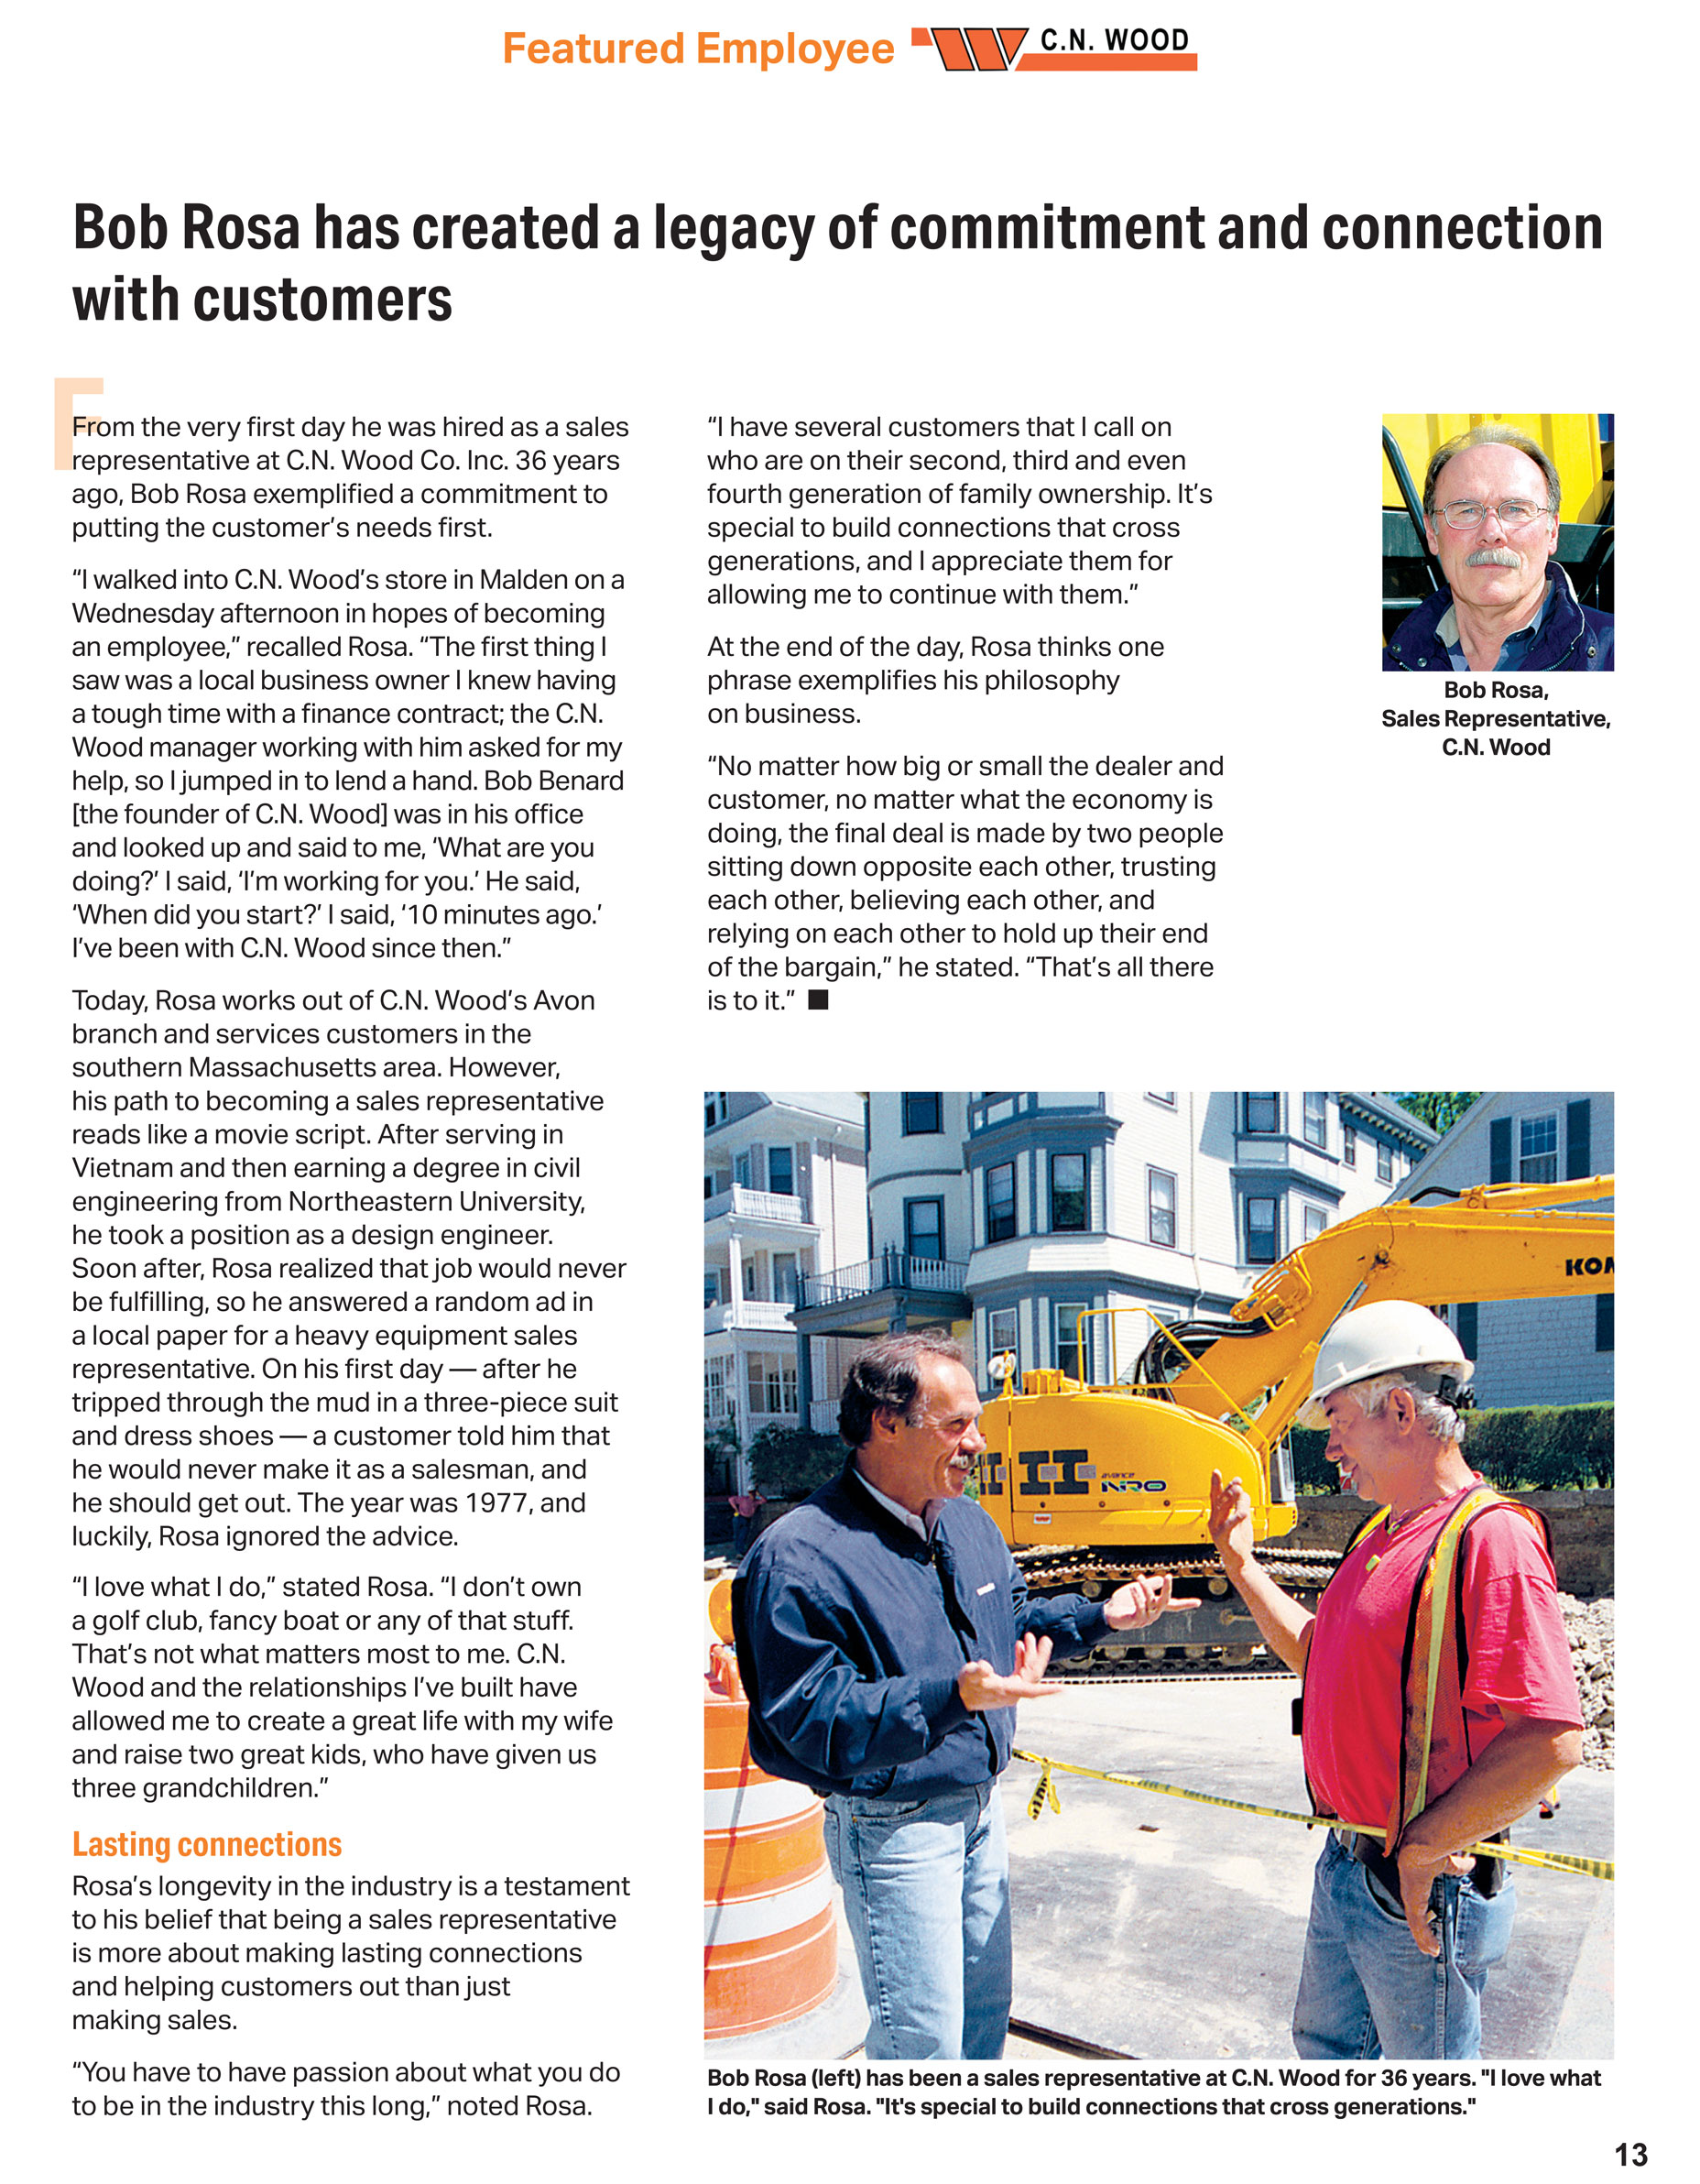 A magazine article featuring an employee, Bob Rosa.